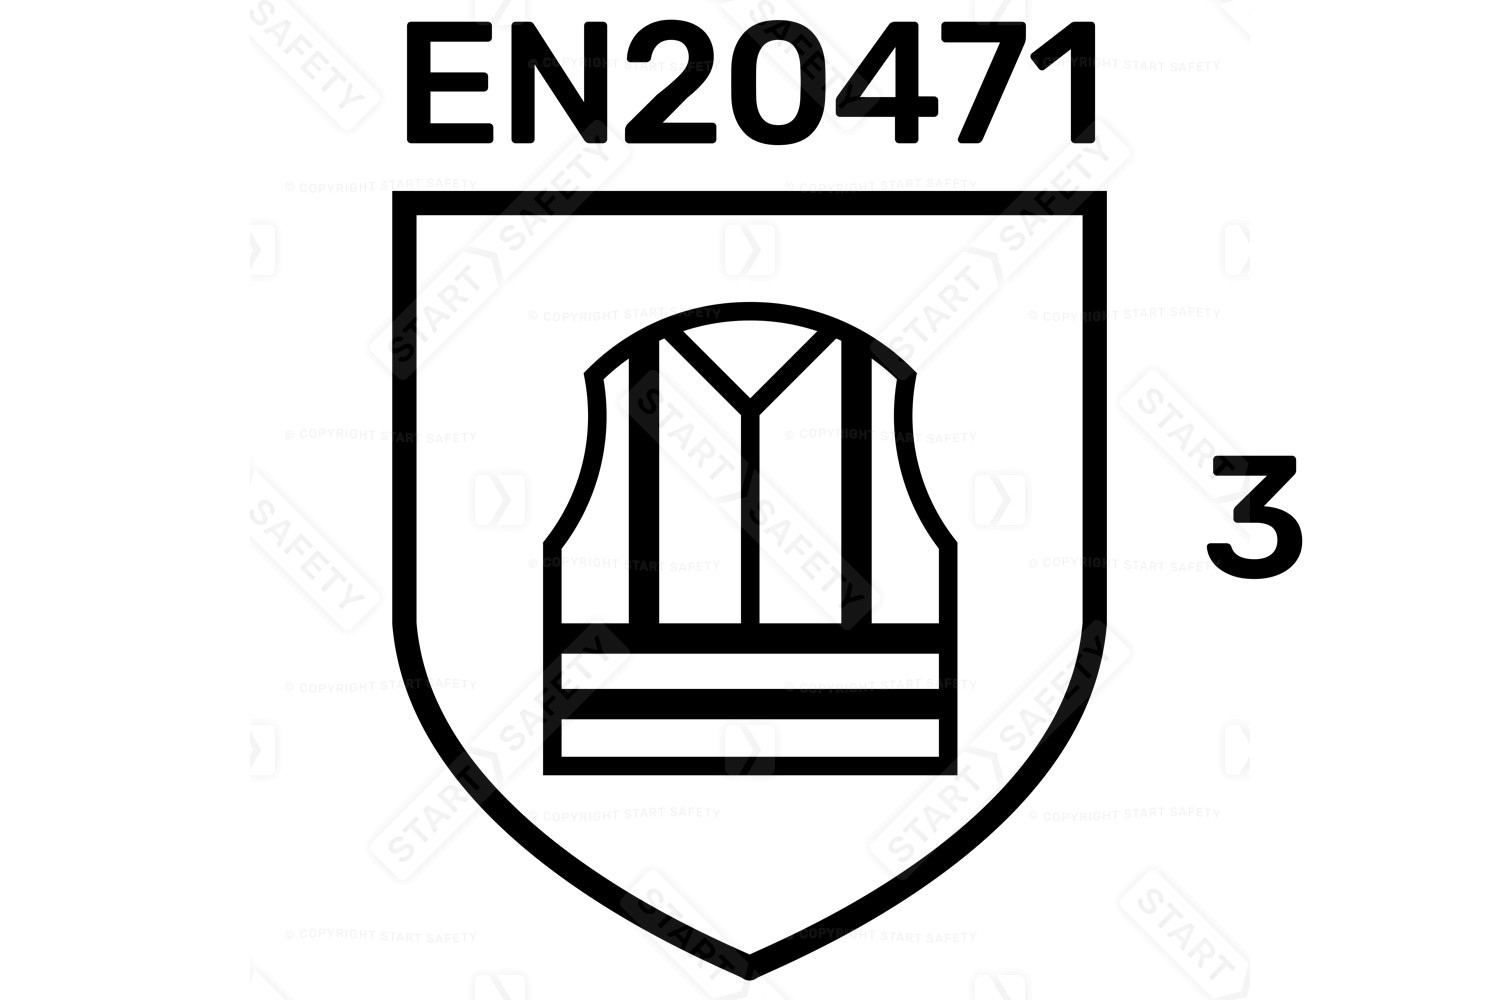 Conforms To EN20471 Class 3